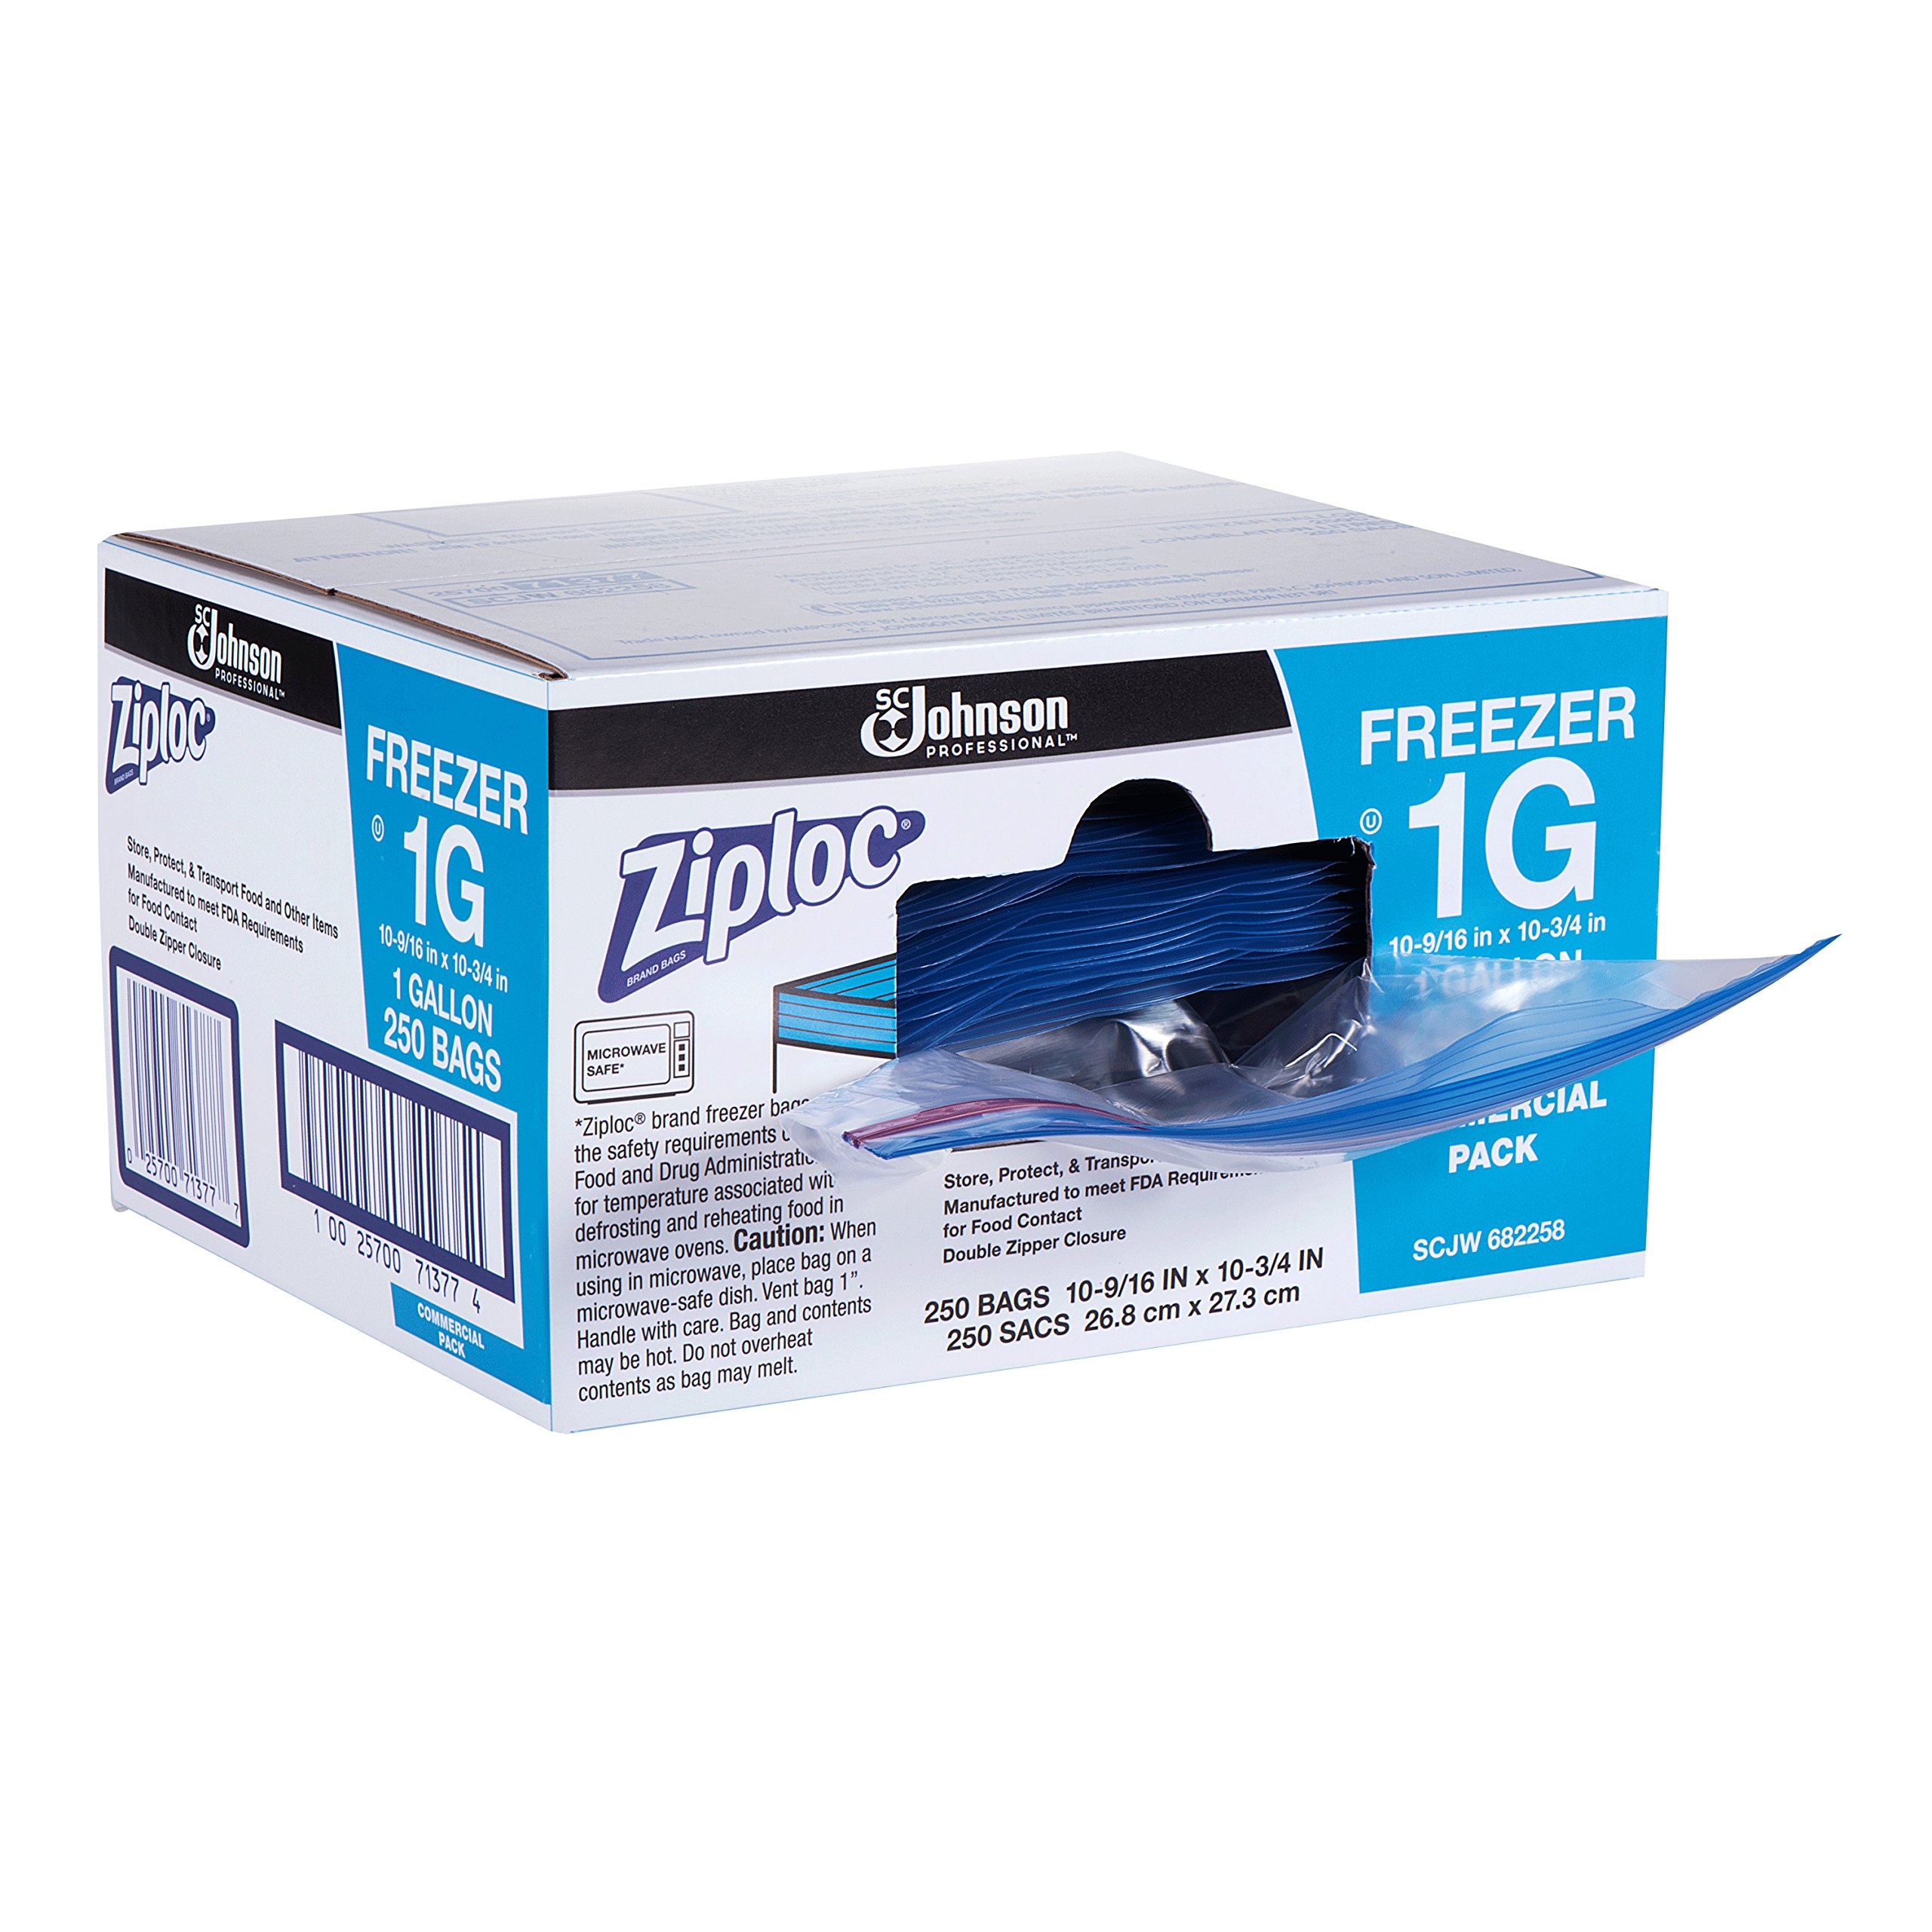 SC Johnson Professional Ziploc Freezer Bags, For Food Organization and Storage, Double Zipper, Gallon, 250 Count